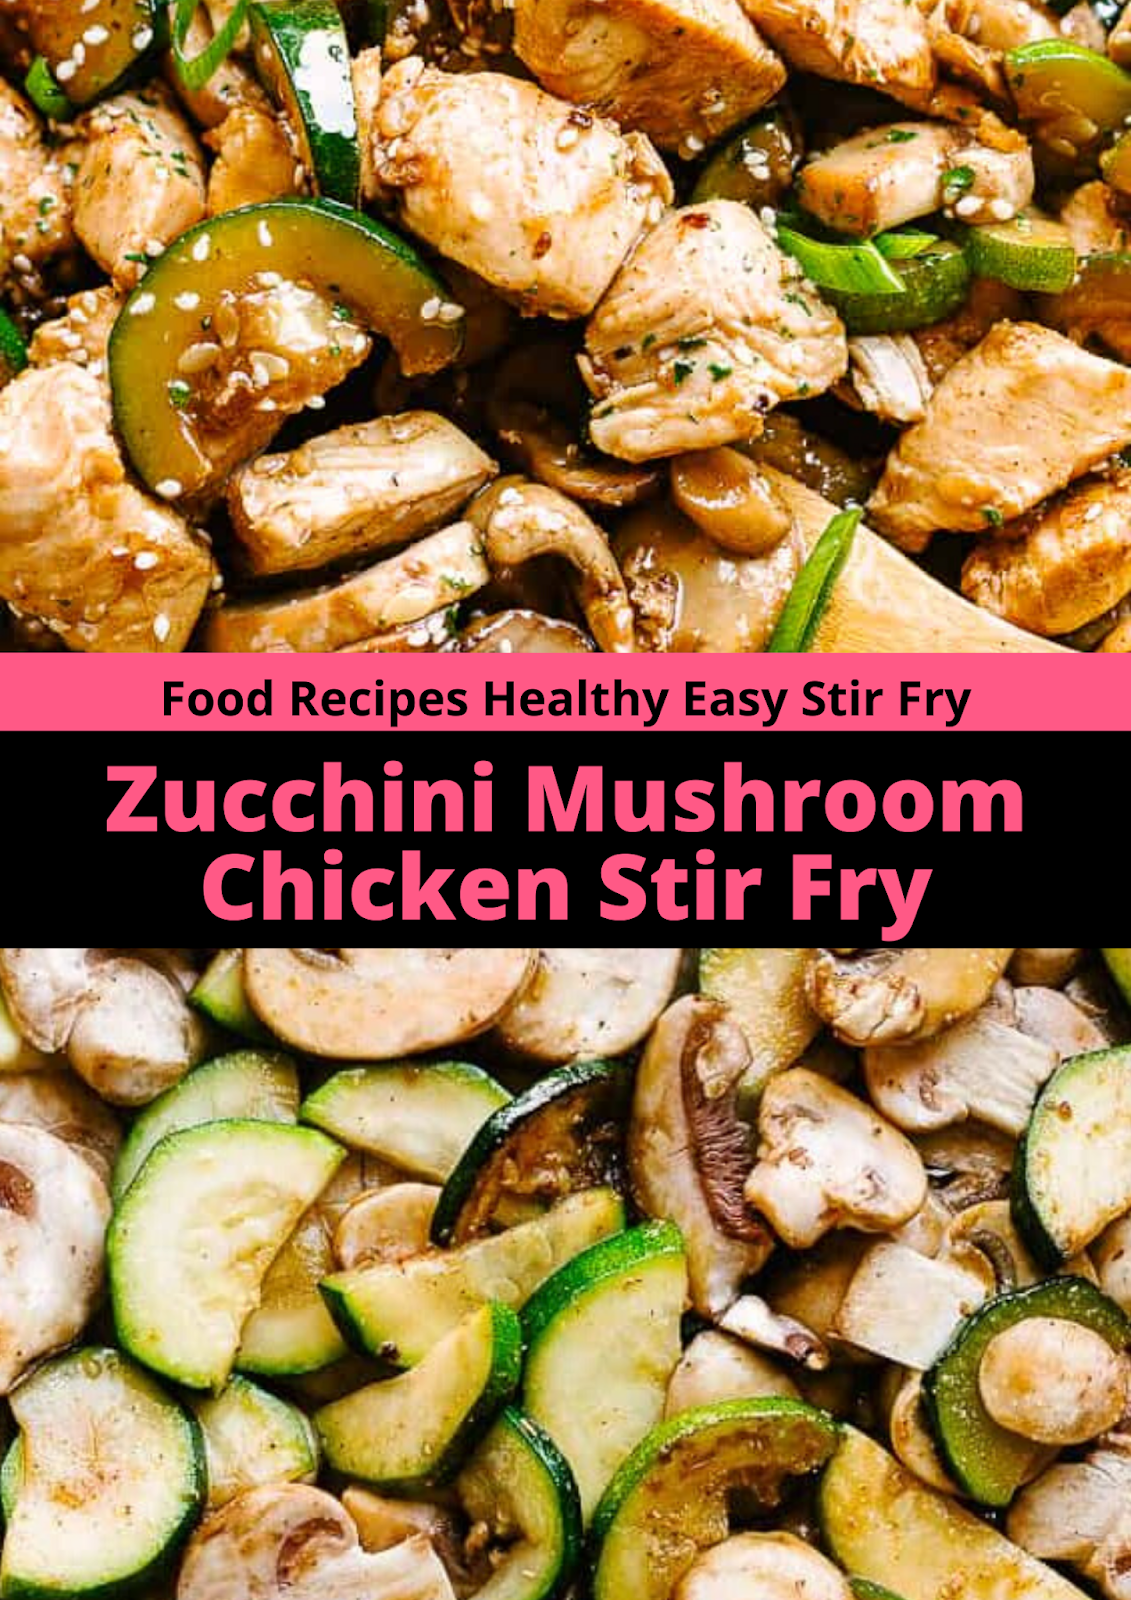 Zucchini Mushroom Chicken Stir Fry